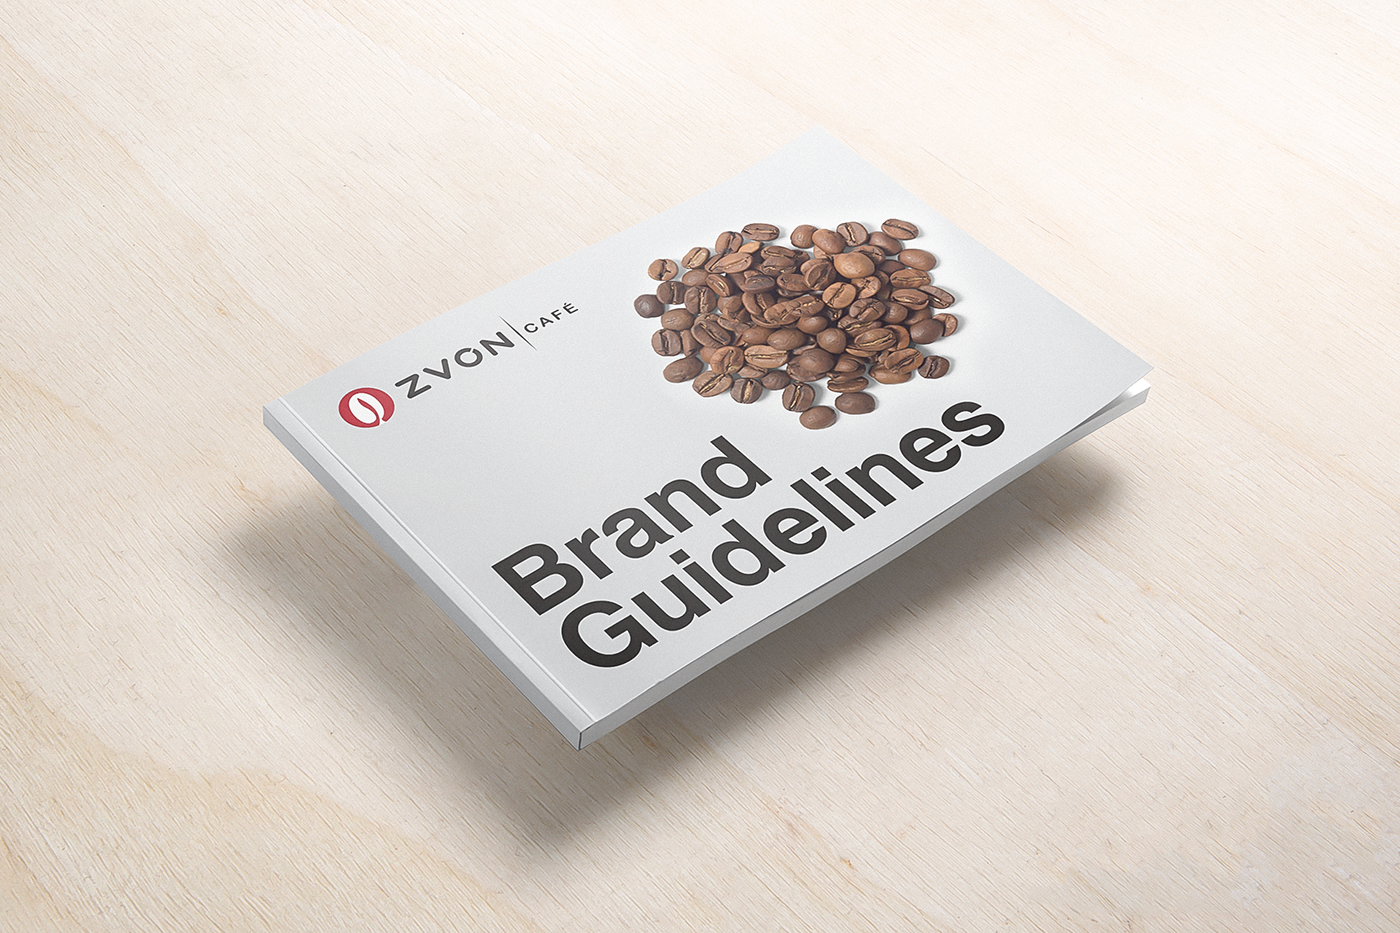 brandbook brand guidelines guidelines brand coffee brand cofee guidelines